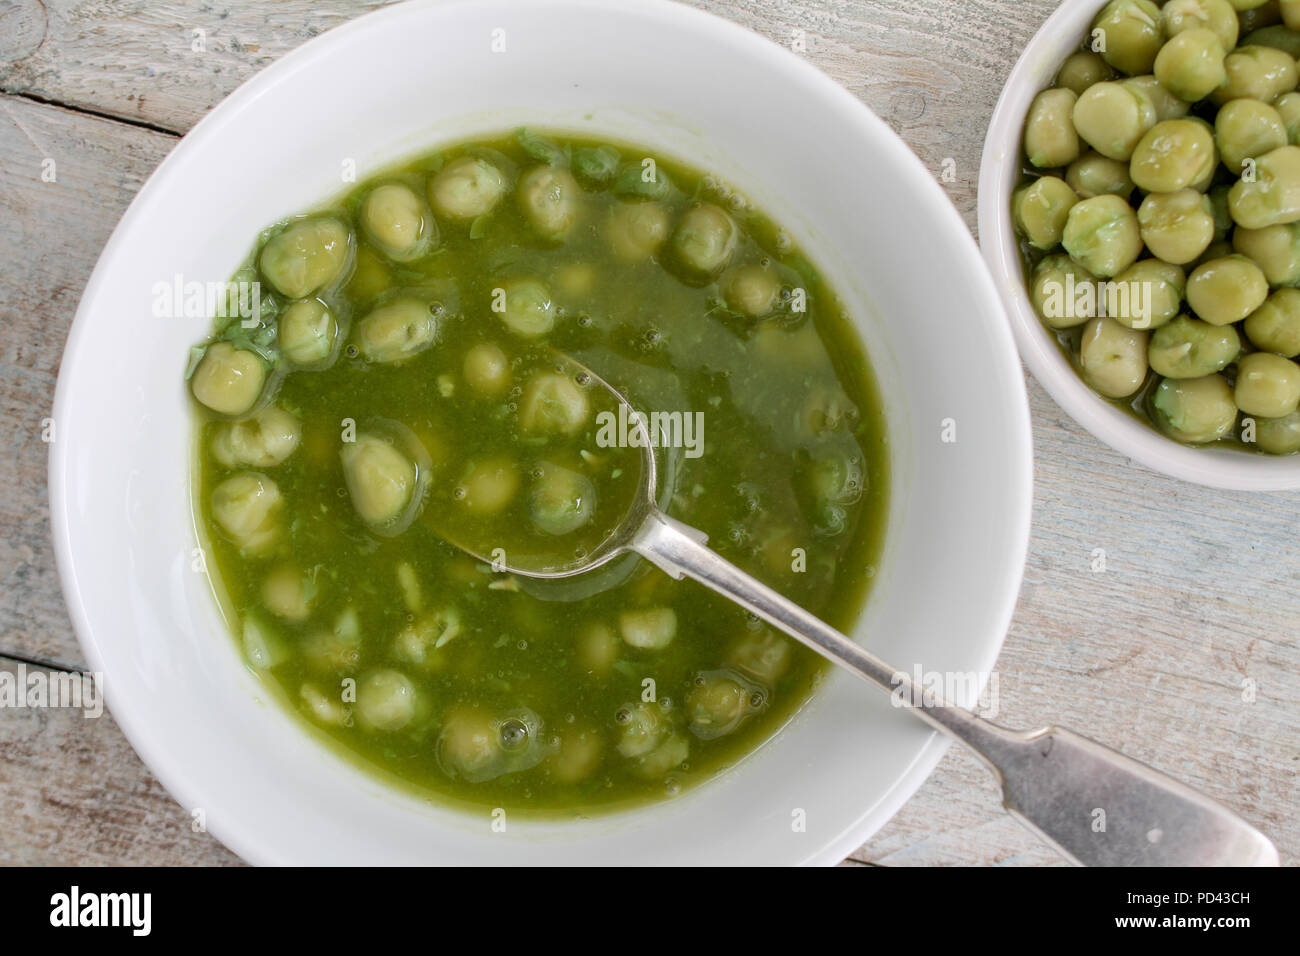 prepared marrowfat peas Stock Photo